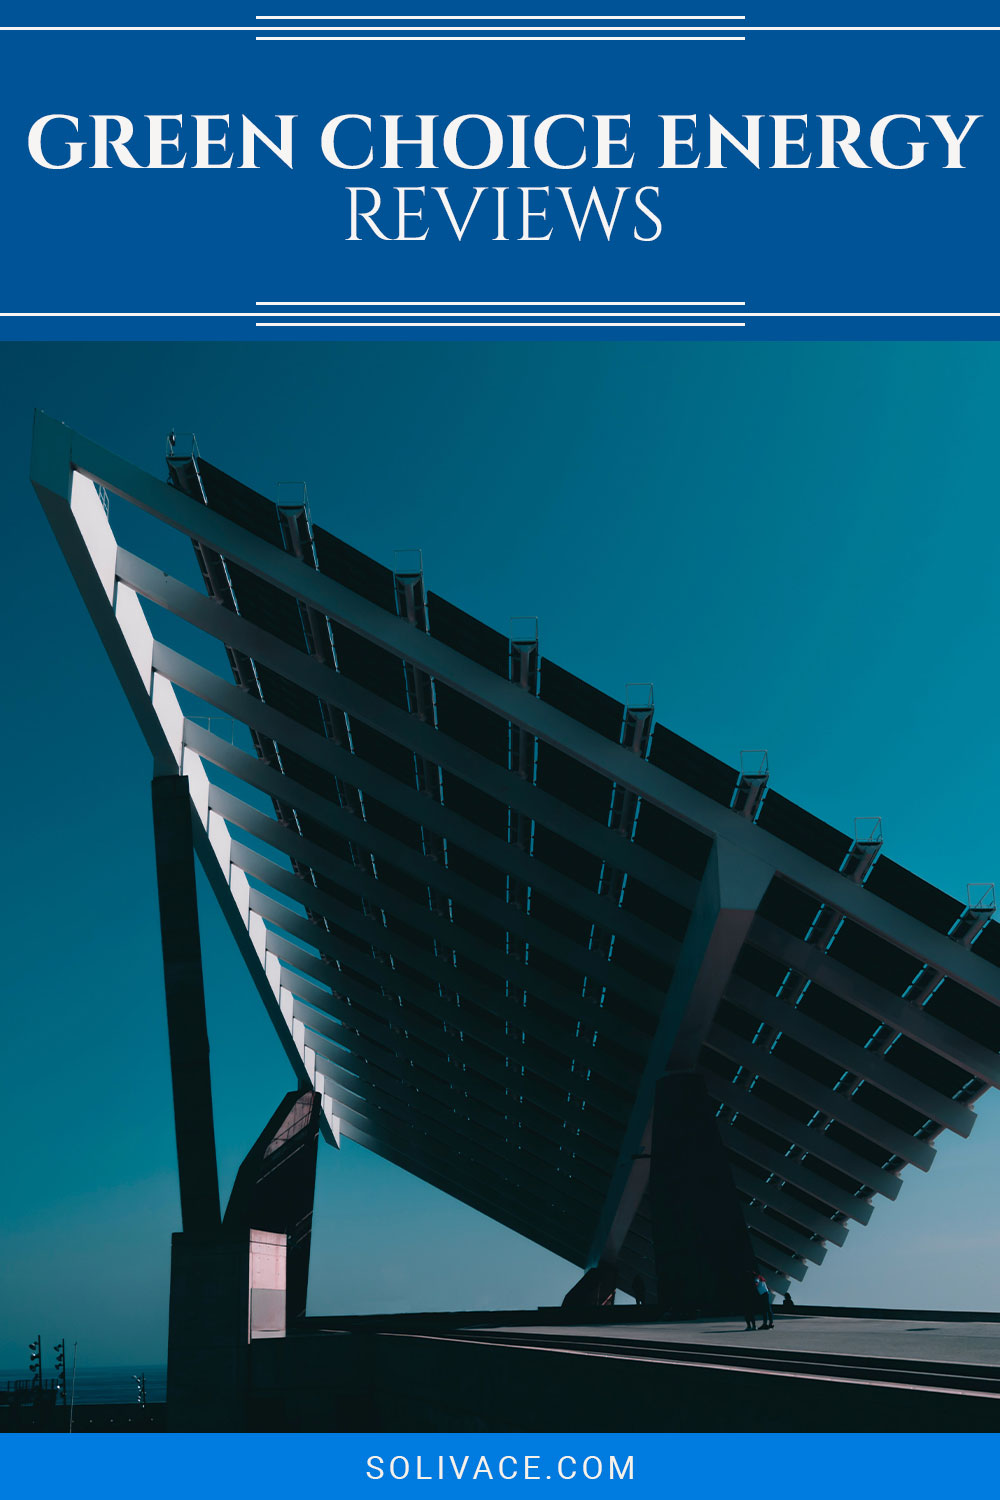 Solar Panel under blue sky - Green Choice Energy Reviews